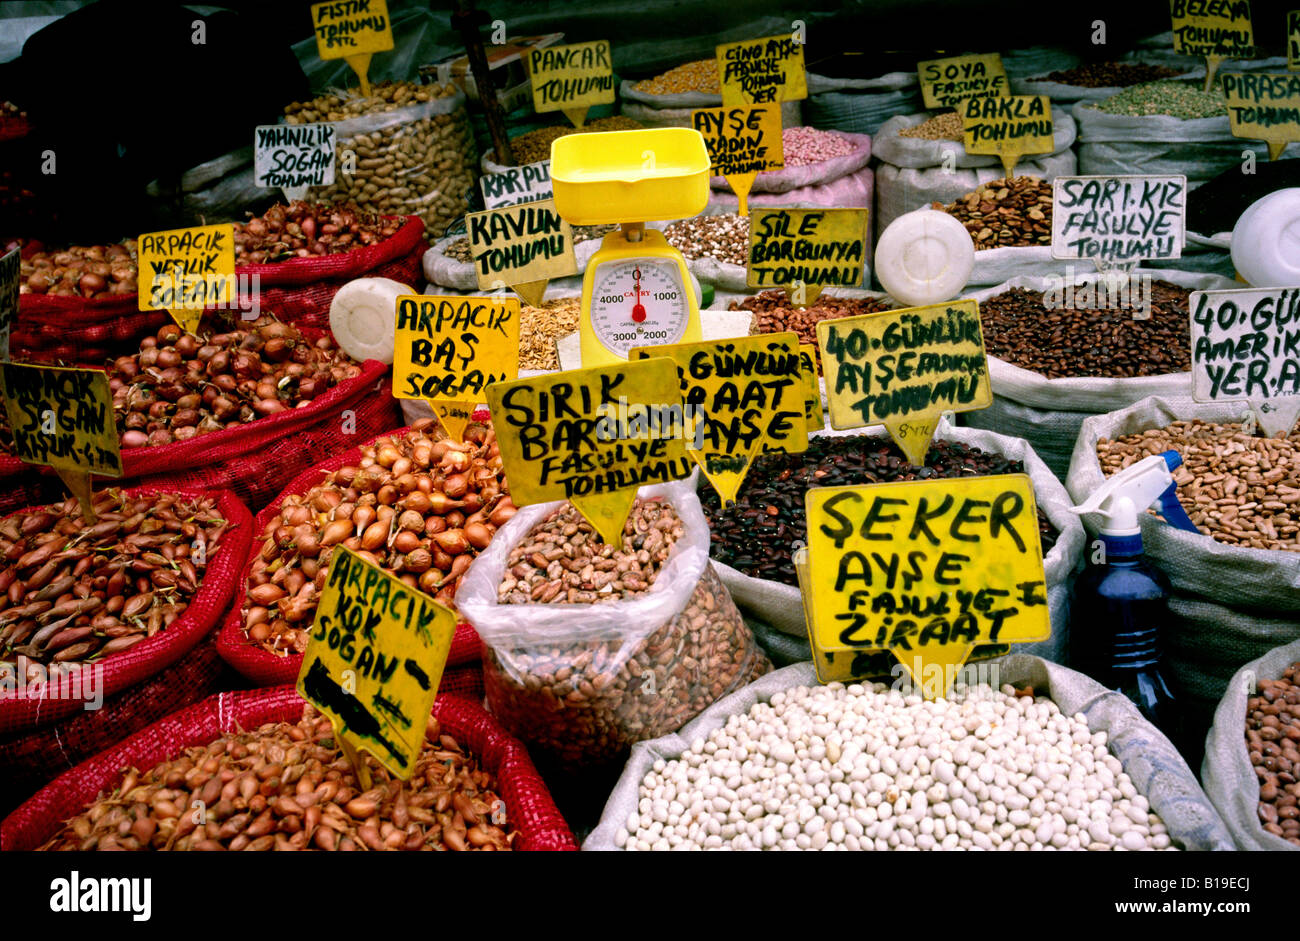 March 12, 2006 - Egyptian spice bazaar at Eminönü in Istanbul. Stock Photo